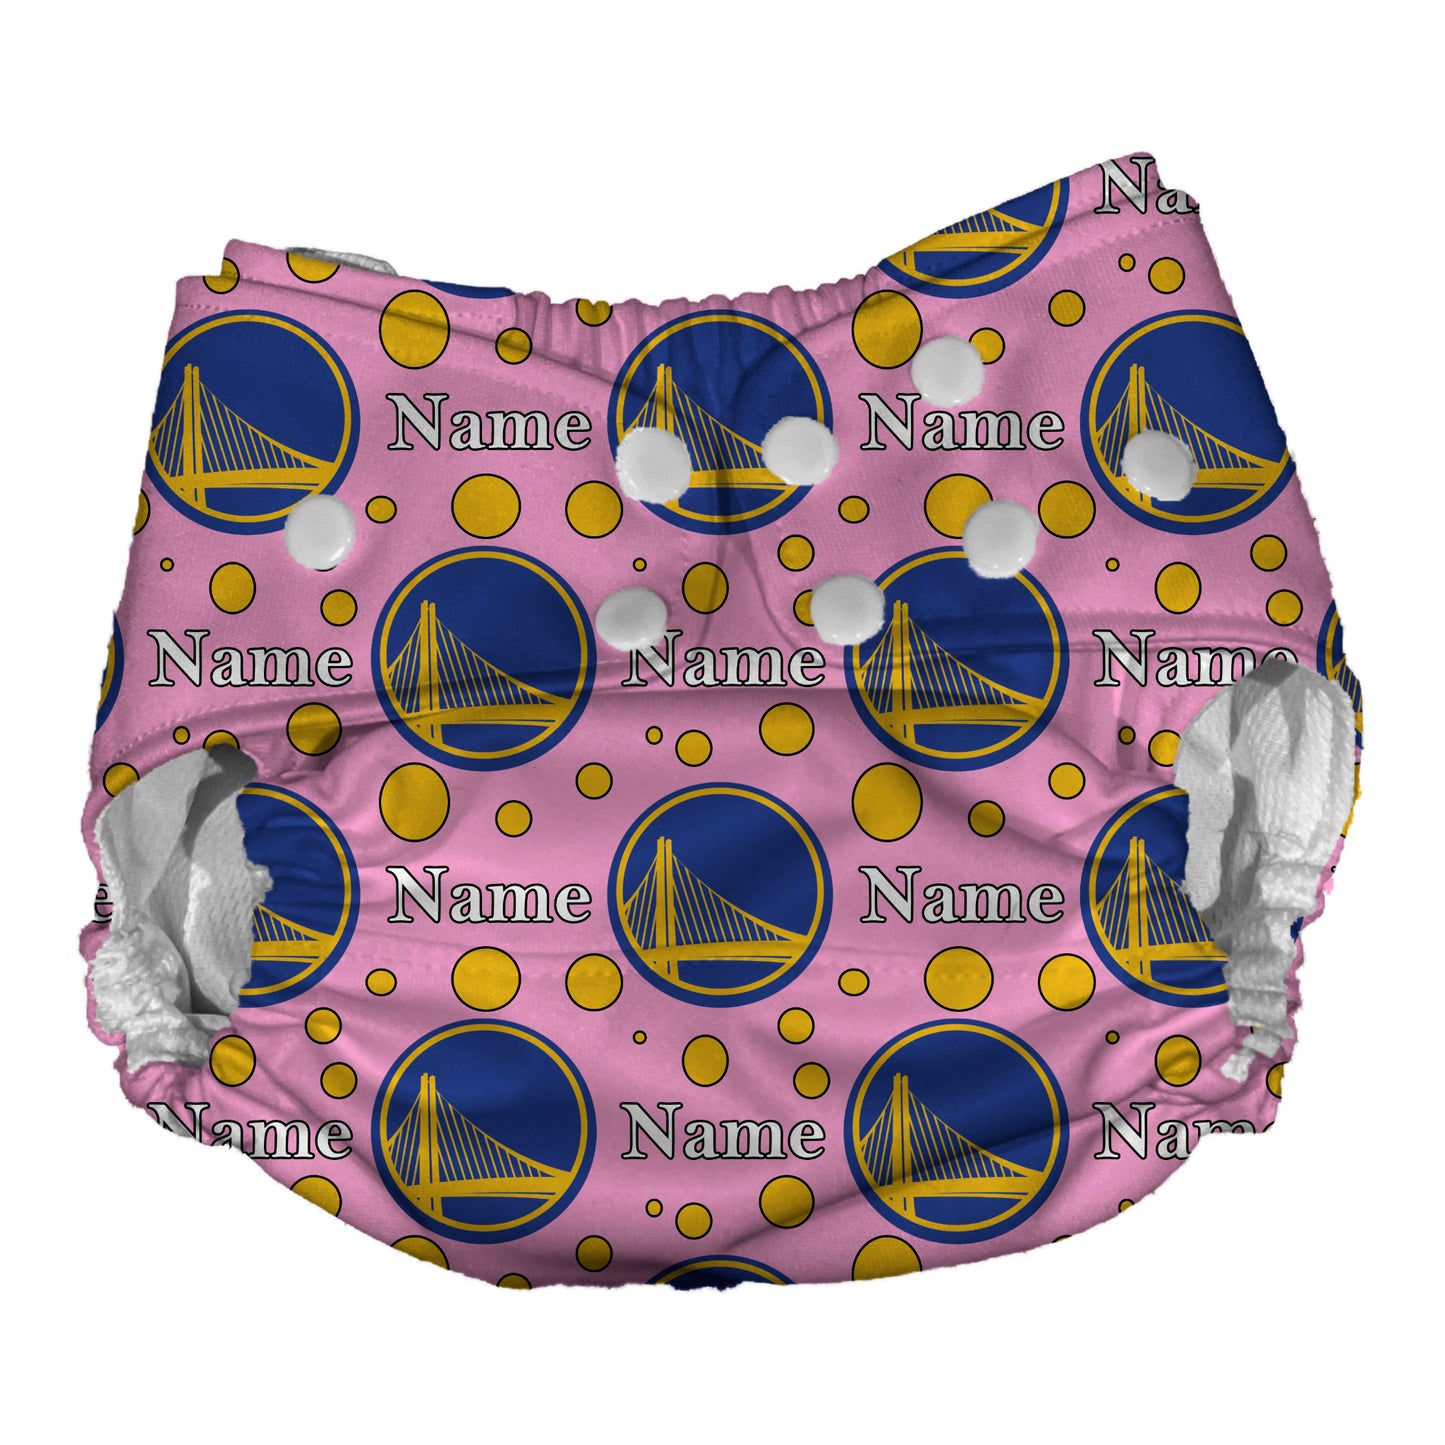 Golden State Warriors Waterproof Diaper Cover | Reusable Swimmer